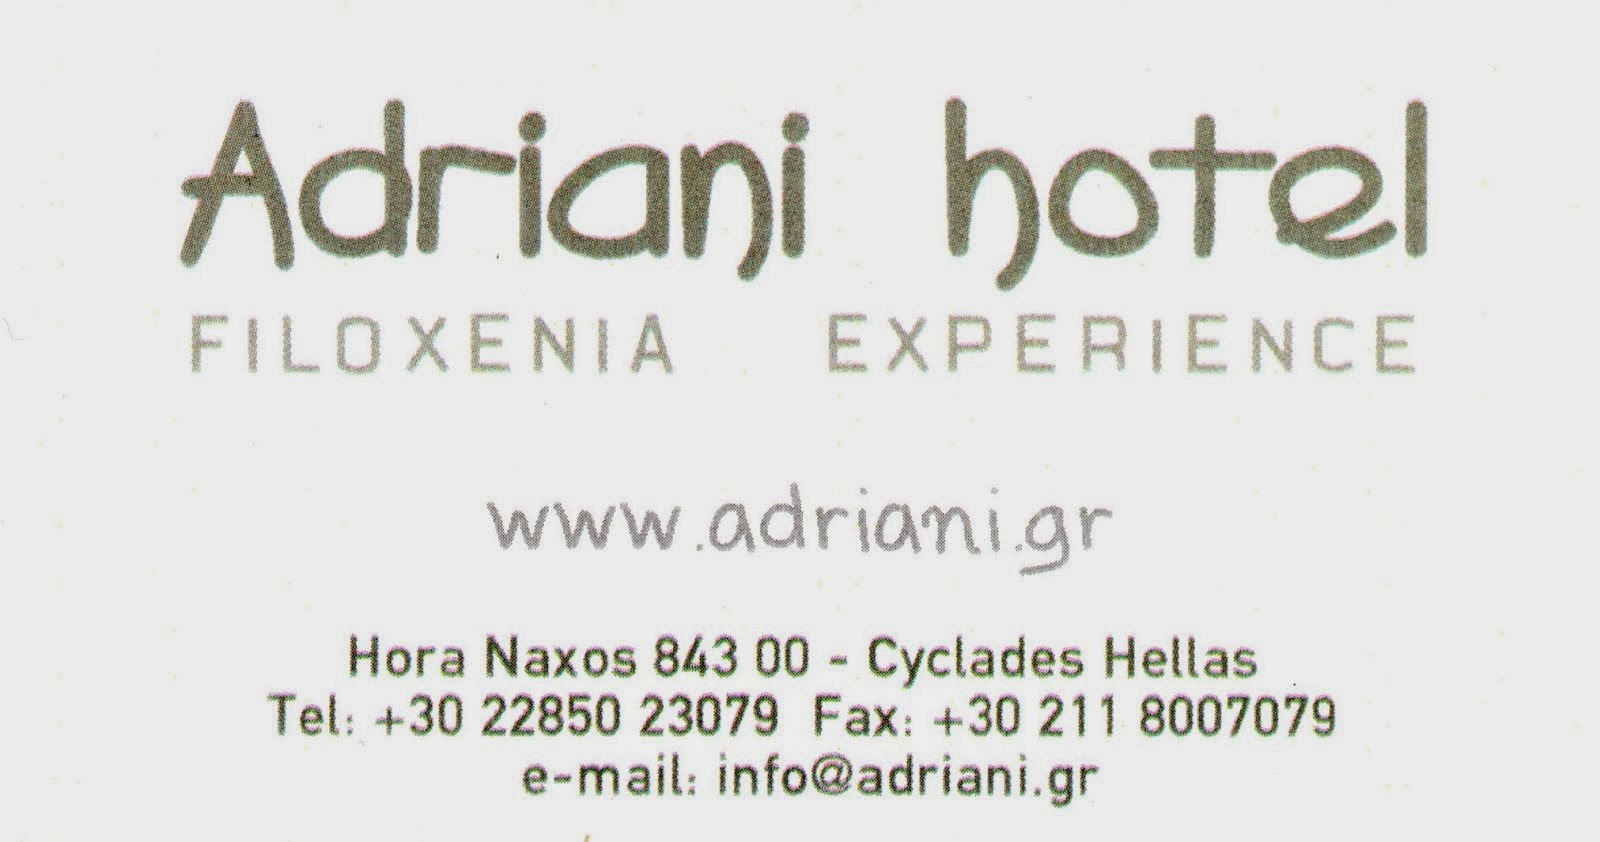 ADRIANI HOTEL